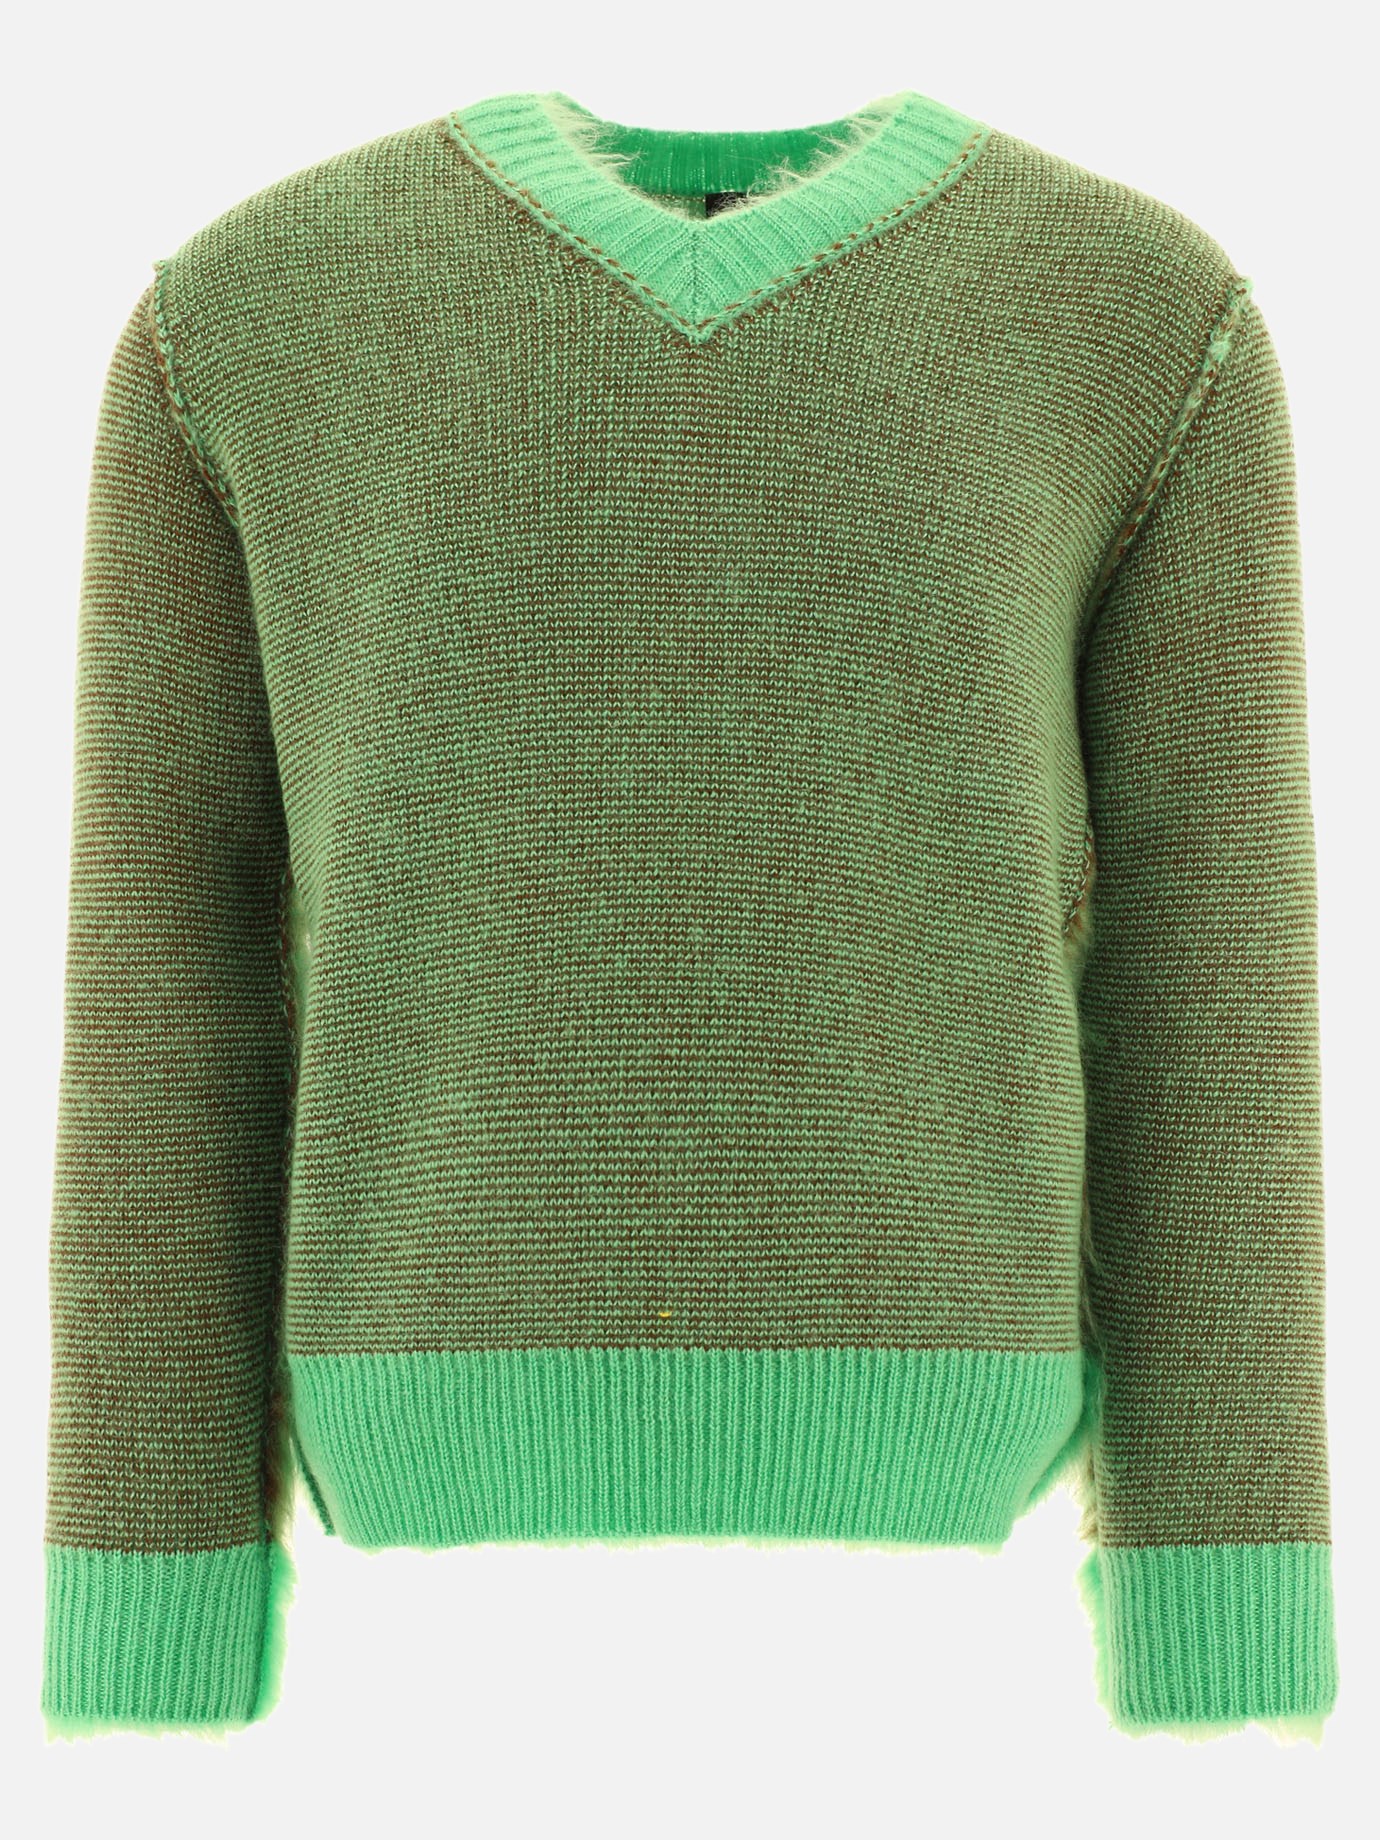 Brushed reversible sweater